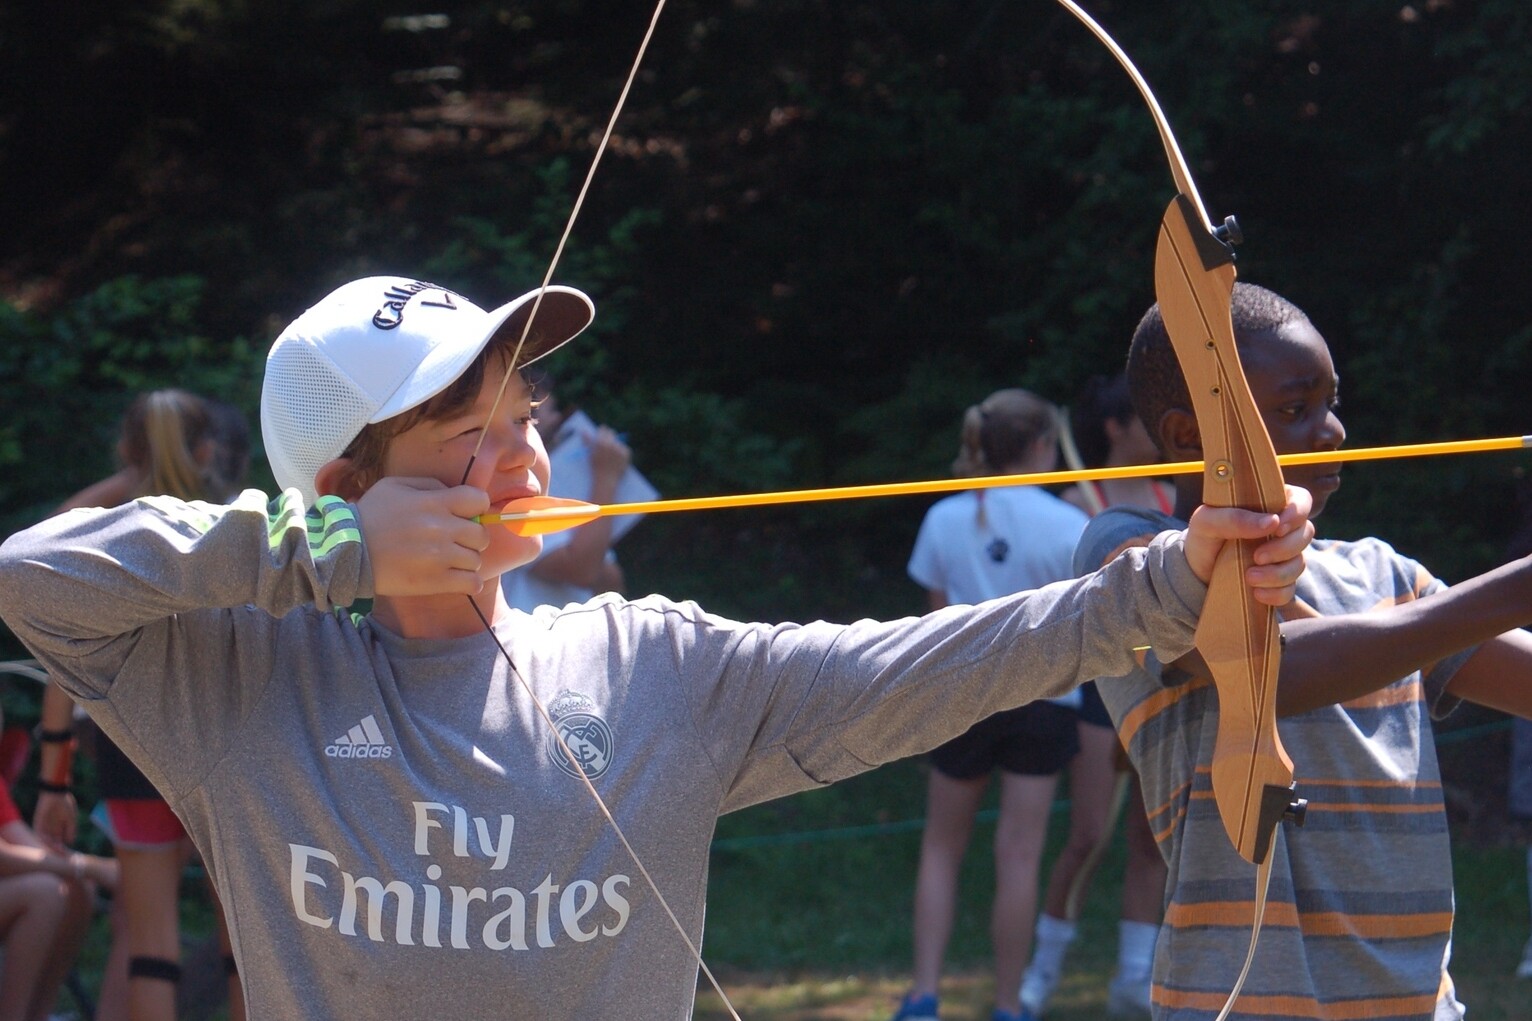 windridge camper practicing archery